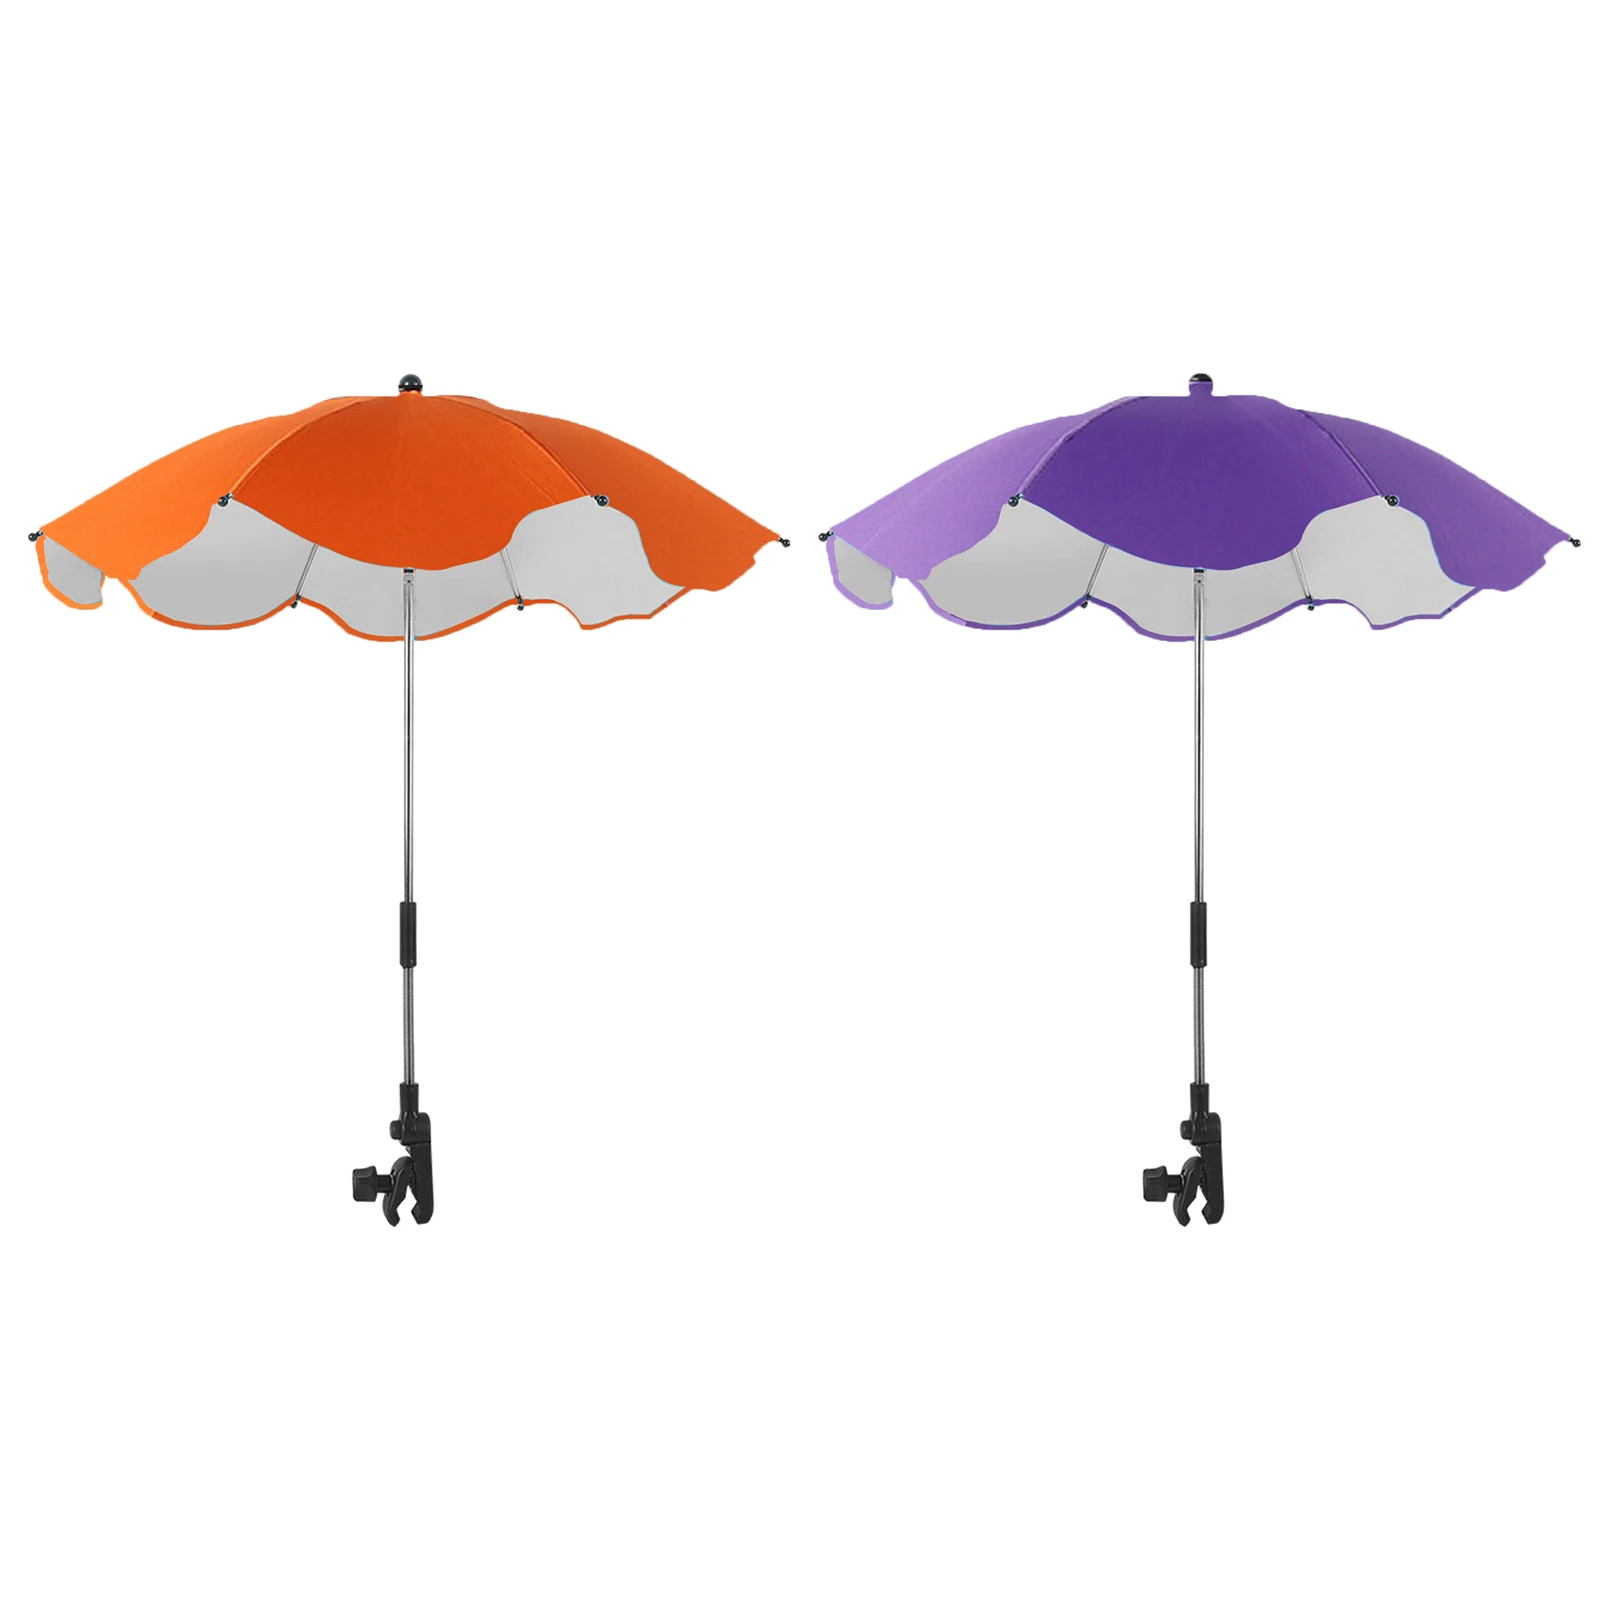 Detachable Baby Stroller Umbrella Pram Trolley UPF50+ Parasol Canopy Cover